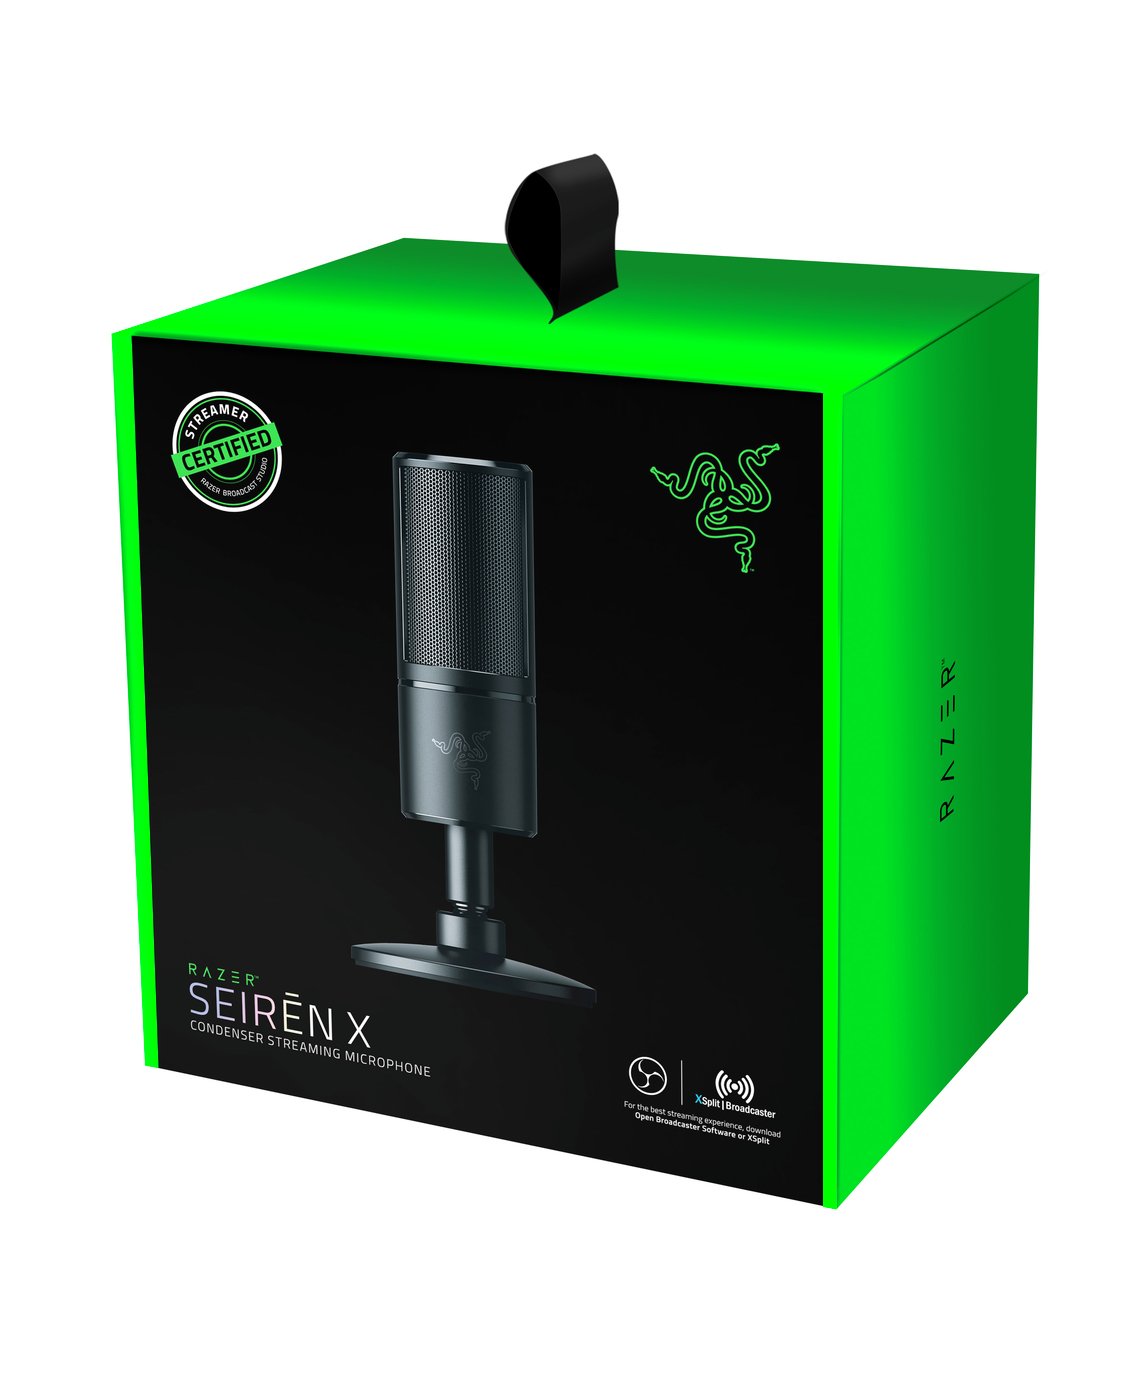 Razer Seiren X Streaming Microphone Review